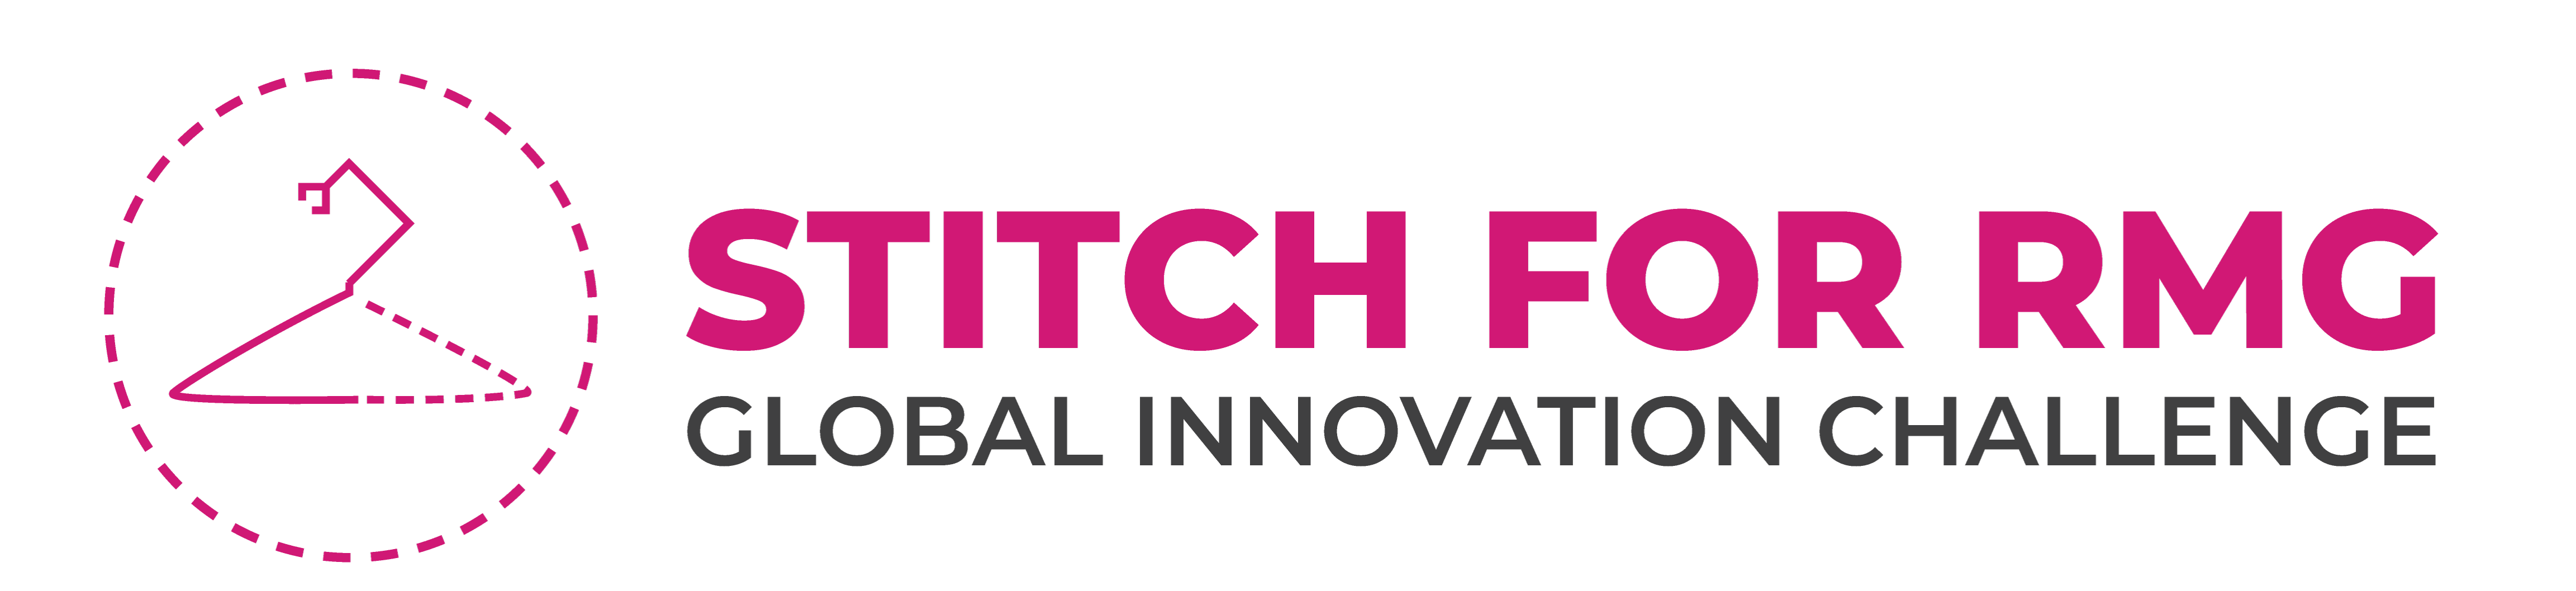 Stitch-for-rmg-global-innovation-challenge